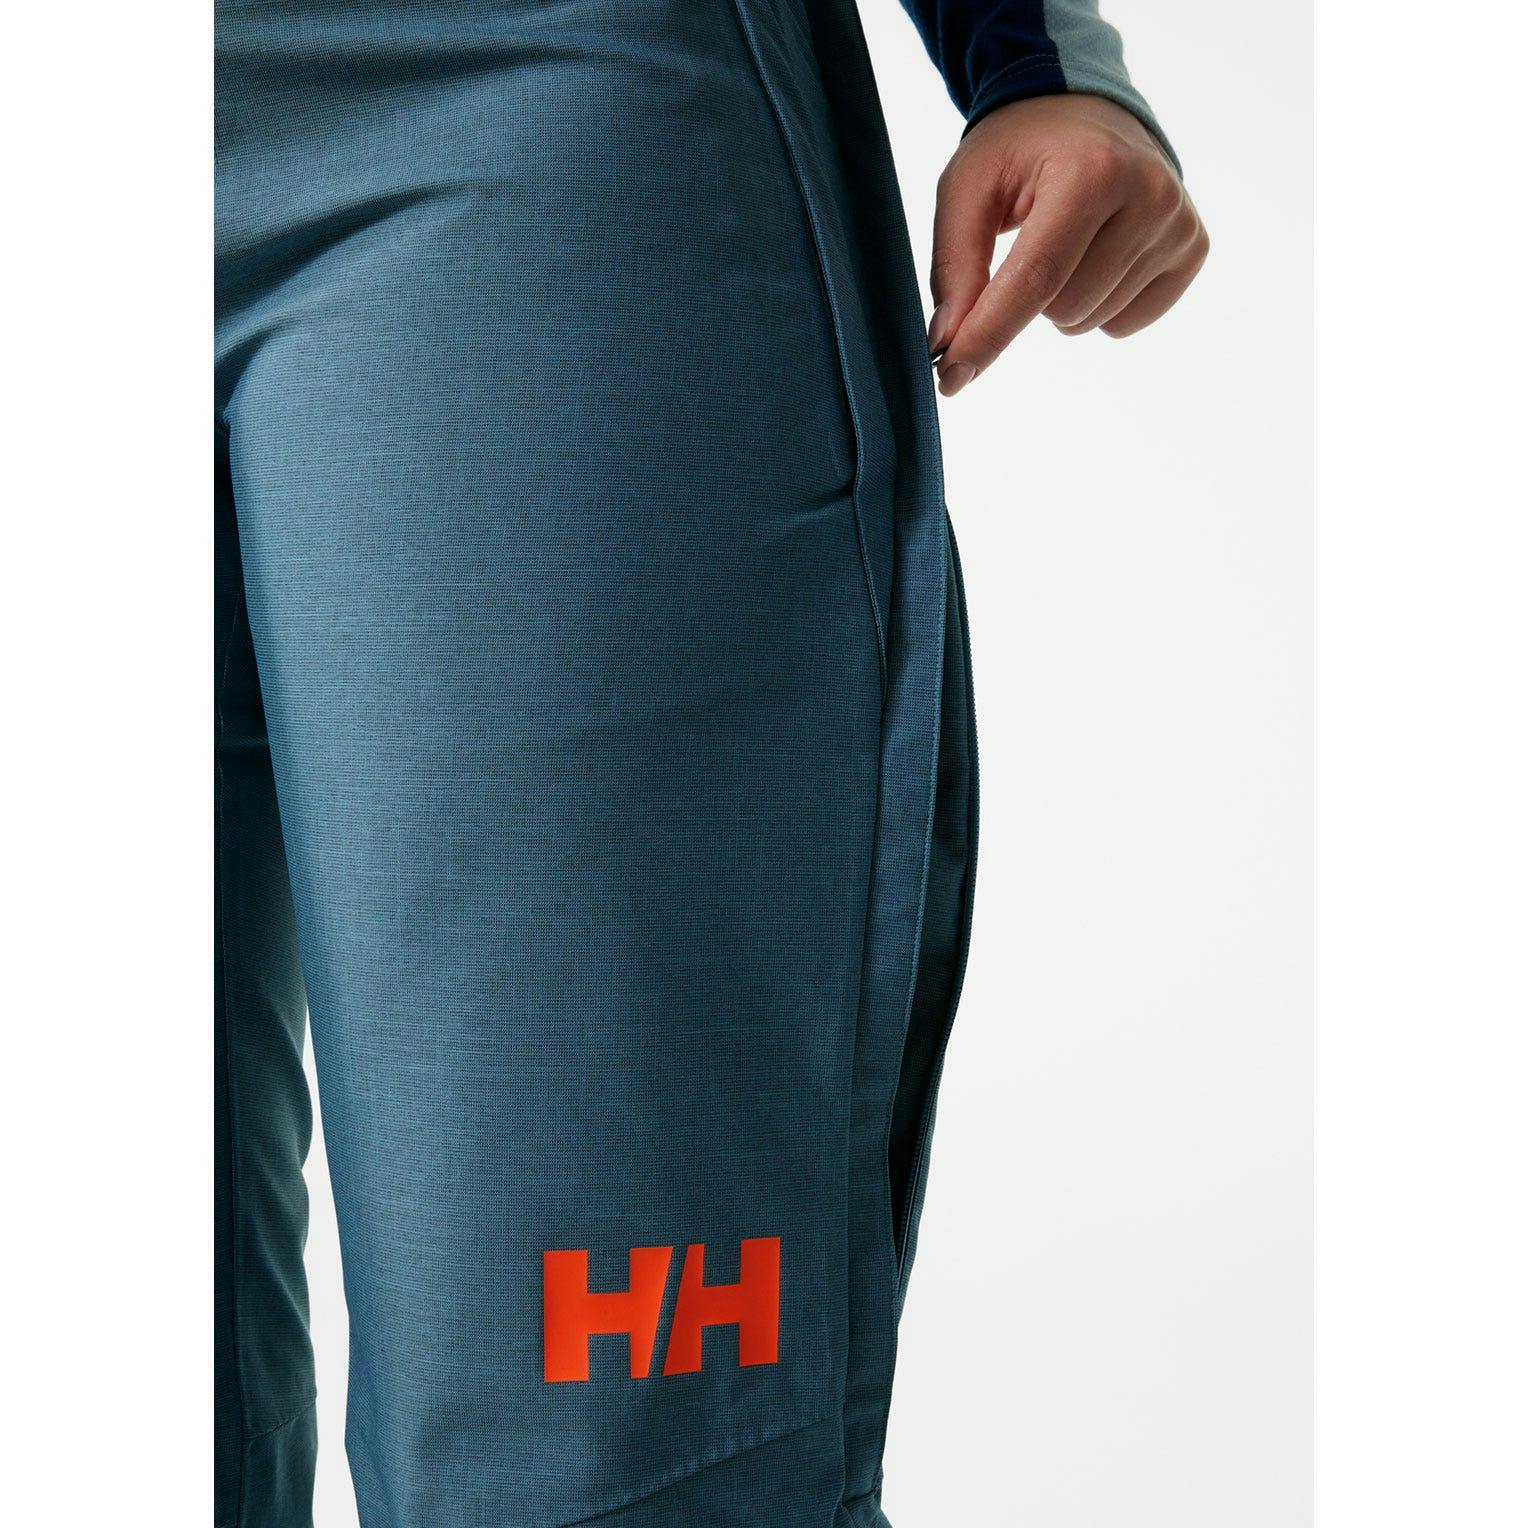 Helly Hansen Women's Powderqueen Bib Ski Pants